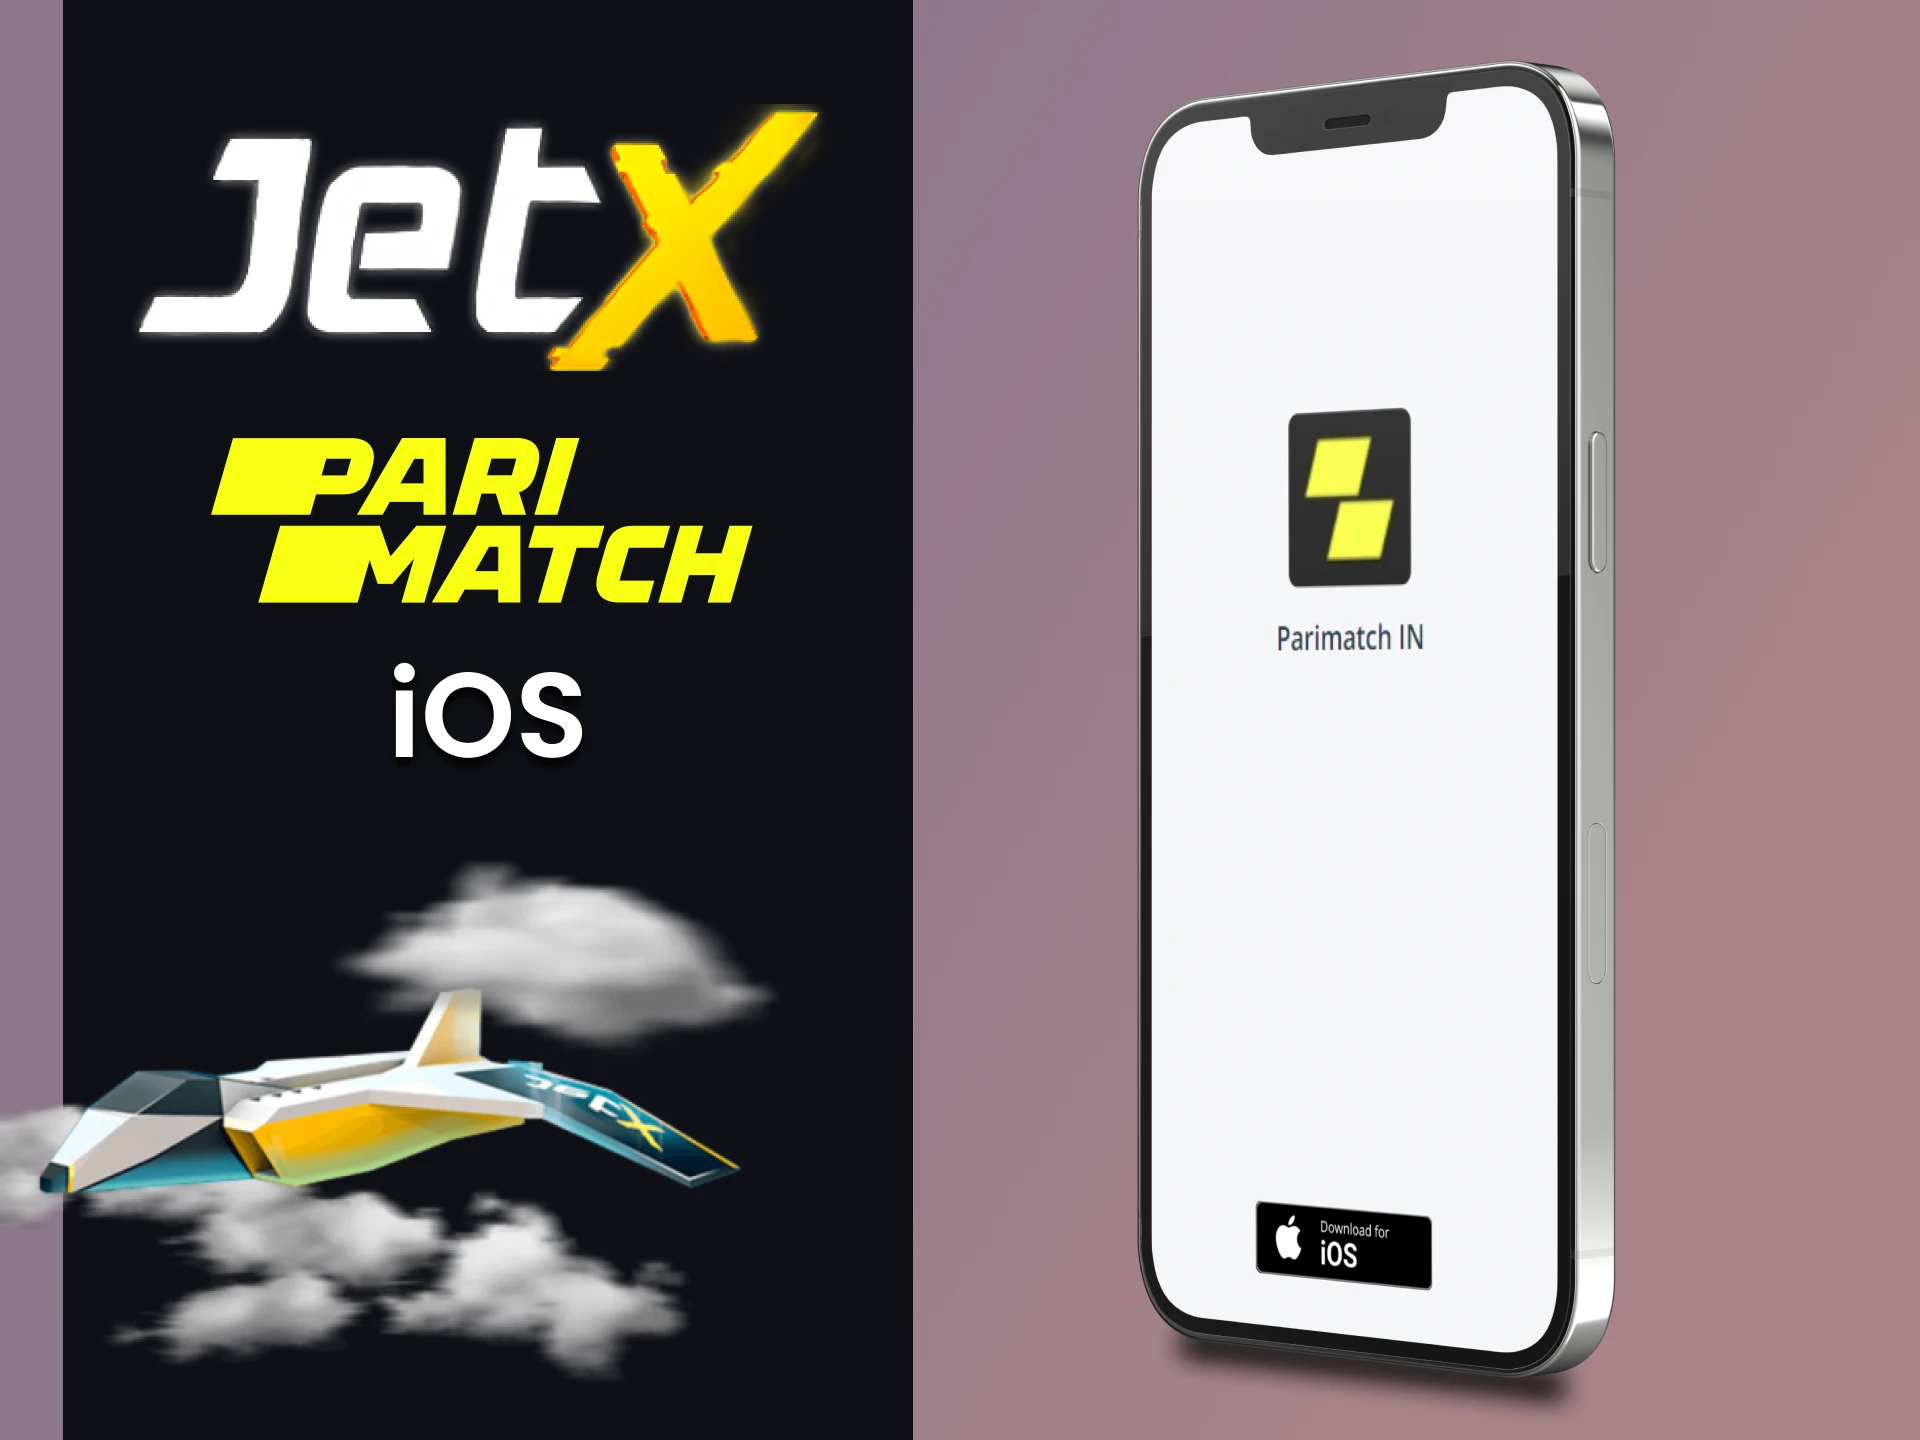 Install the Parimatch app on iOS to play JetX.